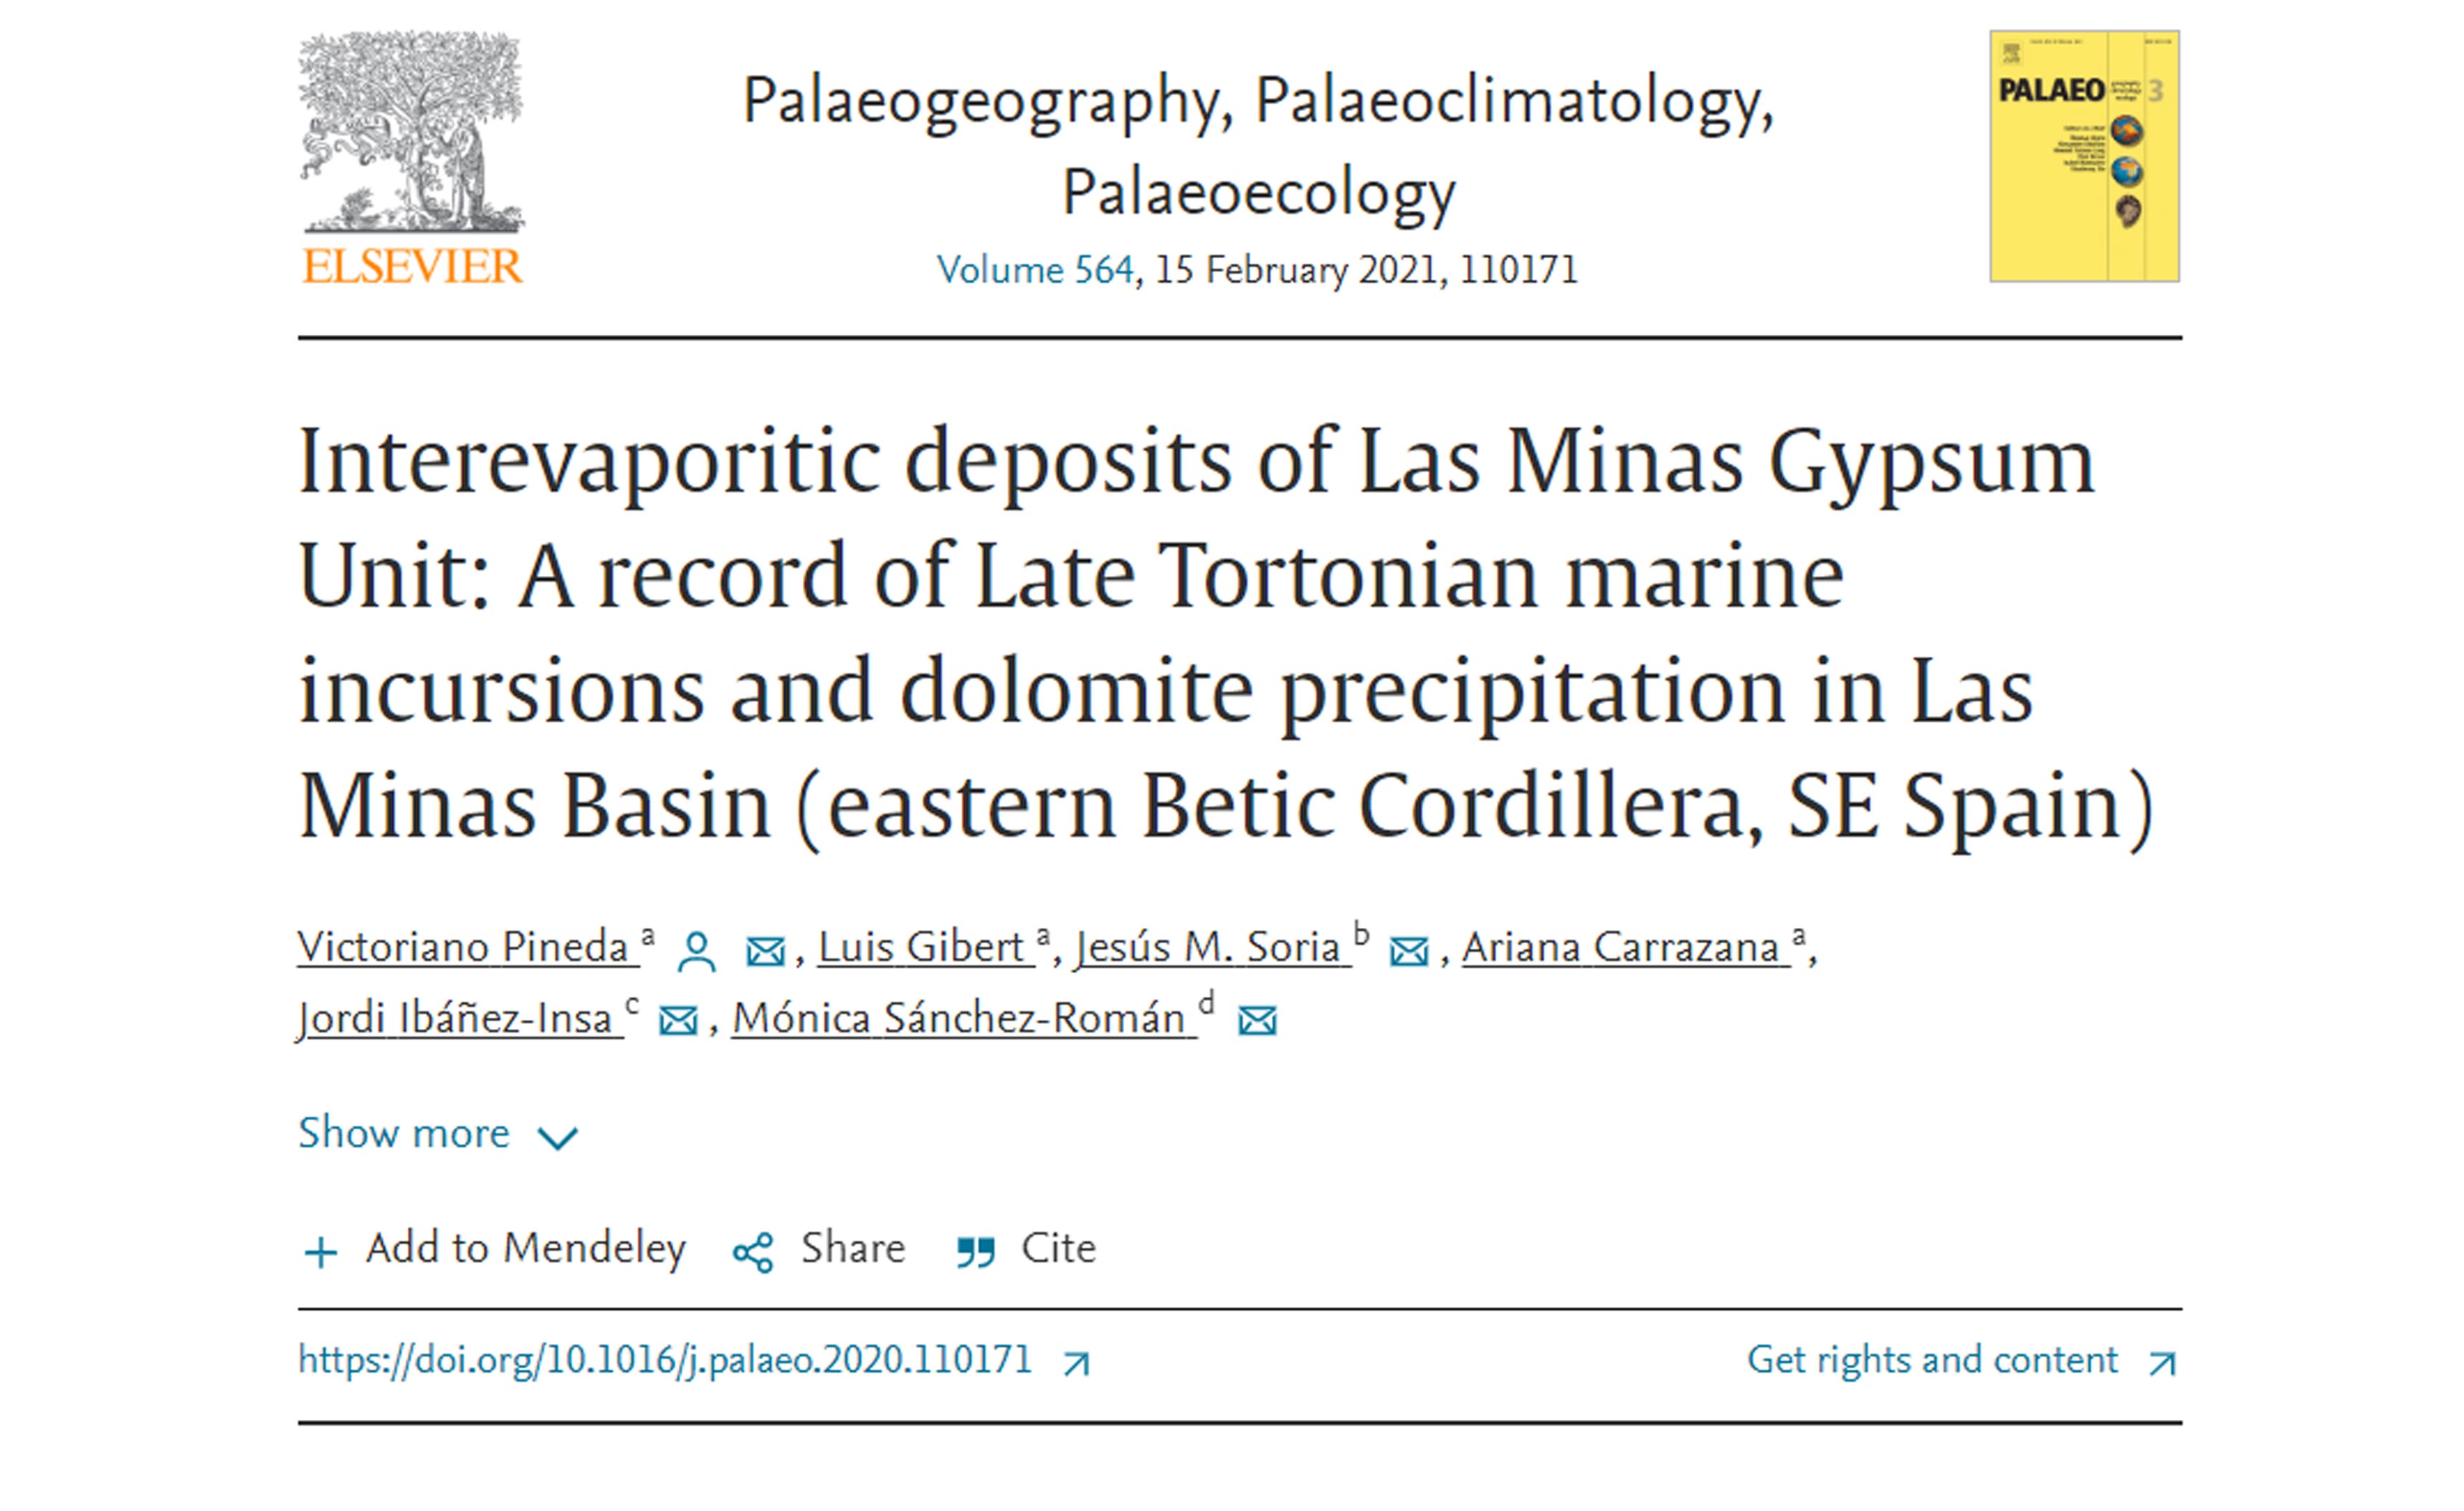 Interevaporitic deposits of Las Minas Gypsum Unit: A record of Late Tortonian marine incursions and dolomite precipitation in Las Minas Basin (eastern Betic Cordillera, SE Spain)